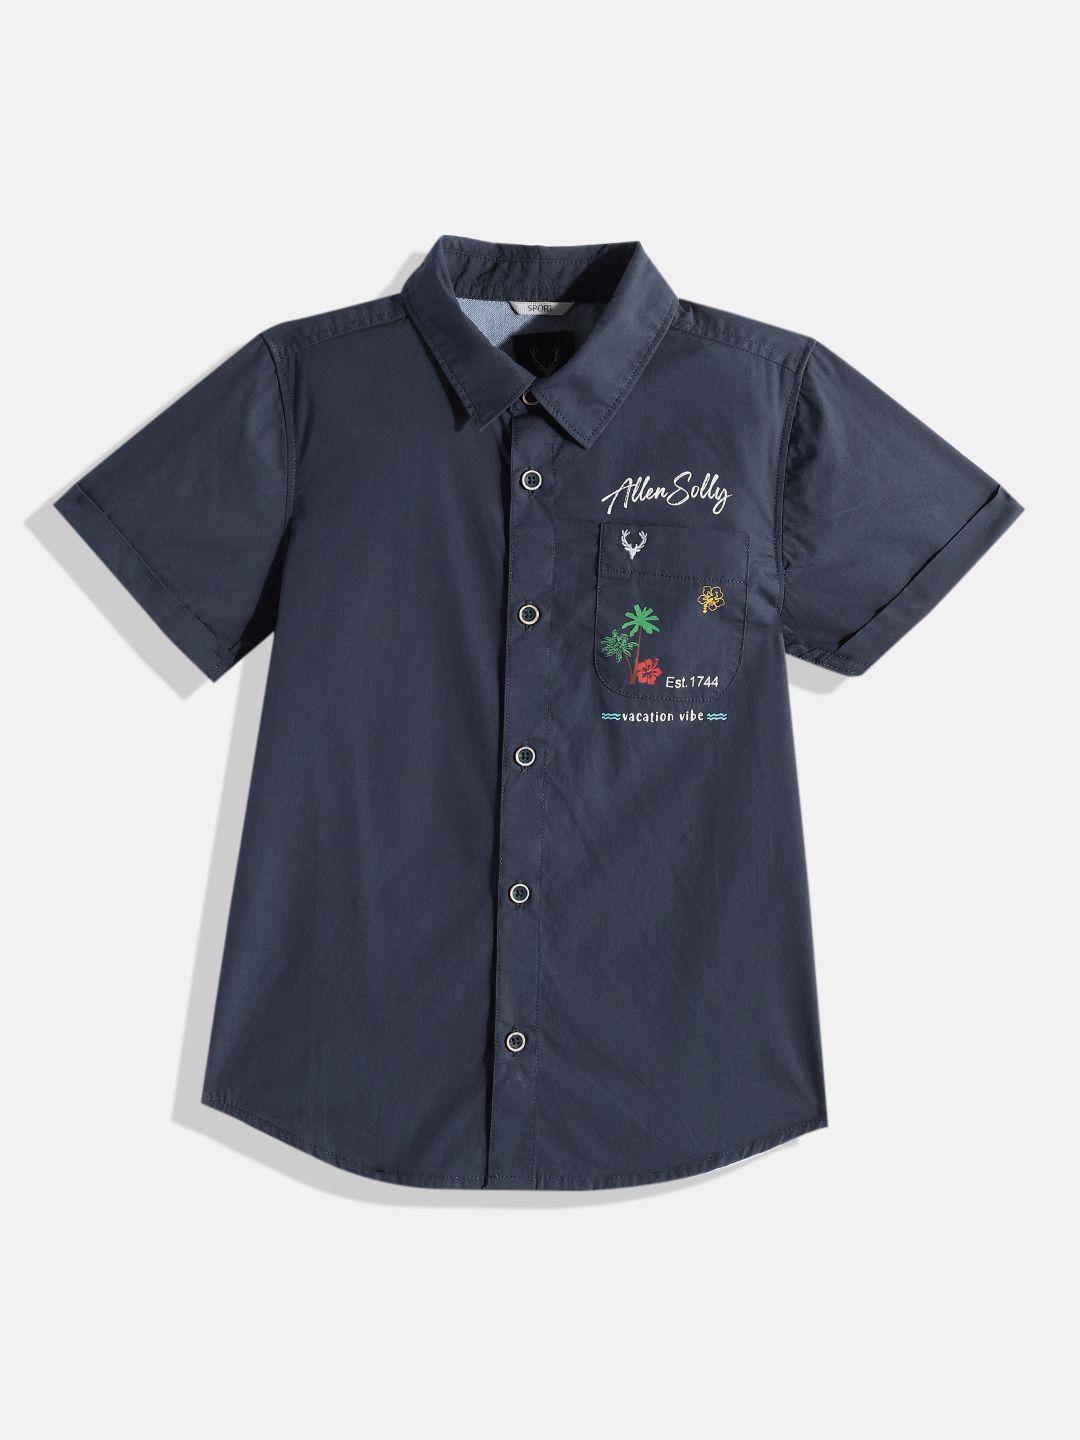 allen solly junior boys navy blue sport back printed pure cotton casual shirt